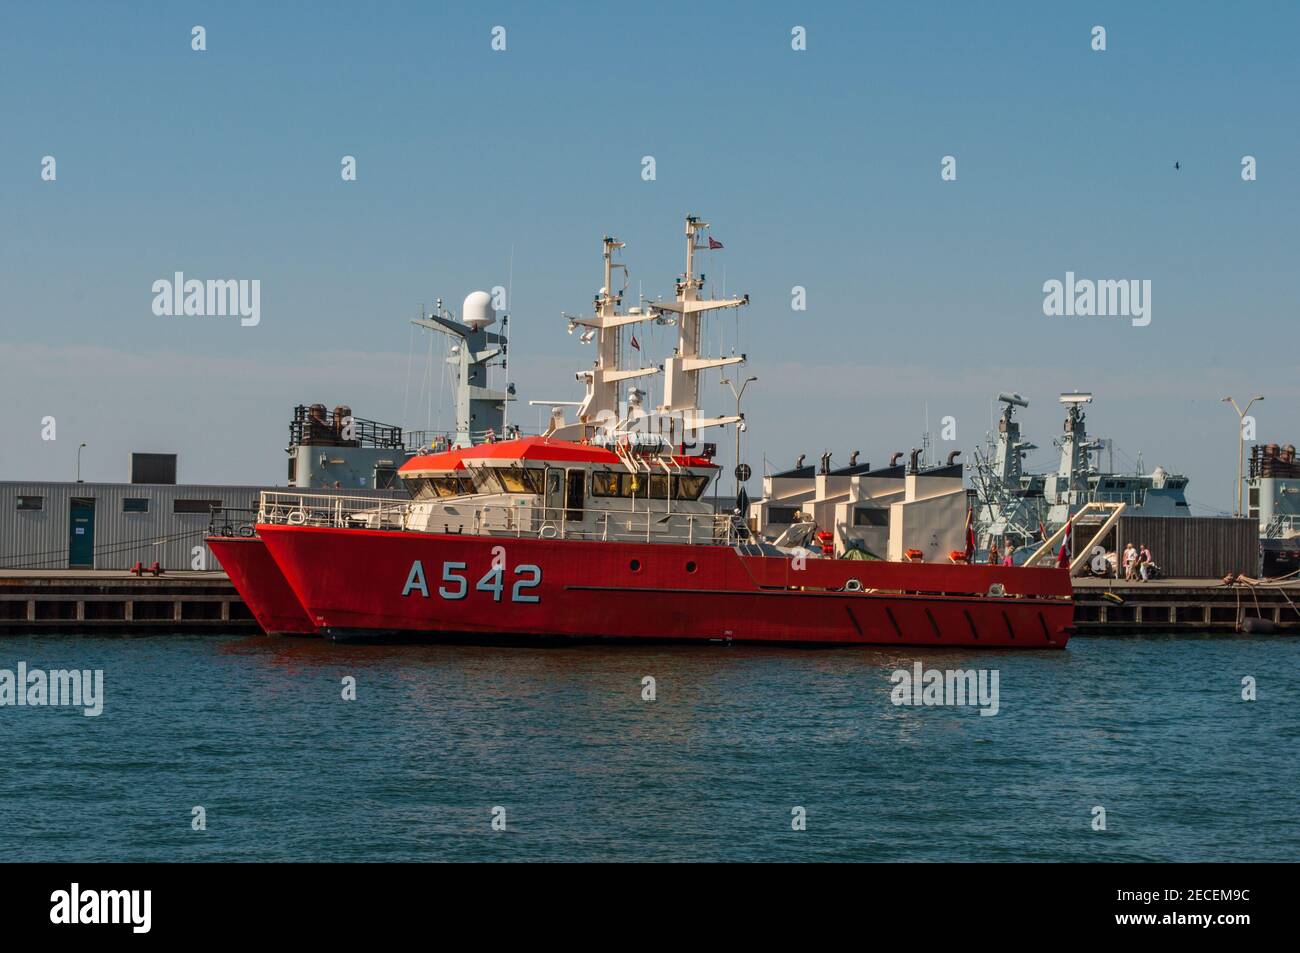 Korsor Danimarca - Agosto 22. 2015: Nave di rilevamento marittima Fyrholm A542 Foto Stock